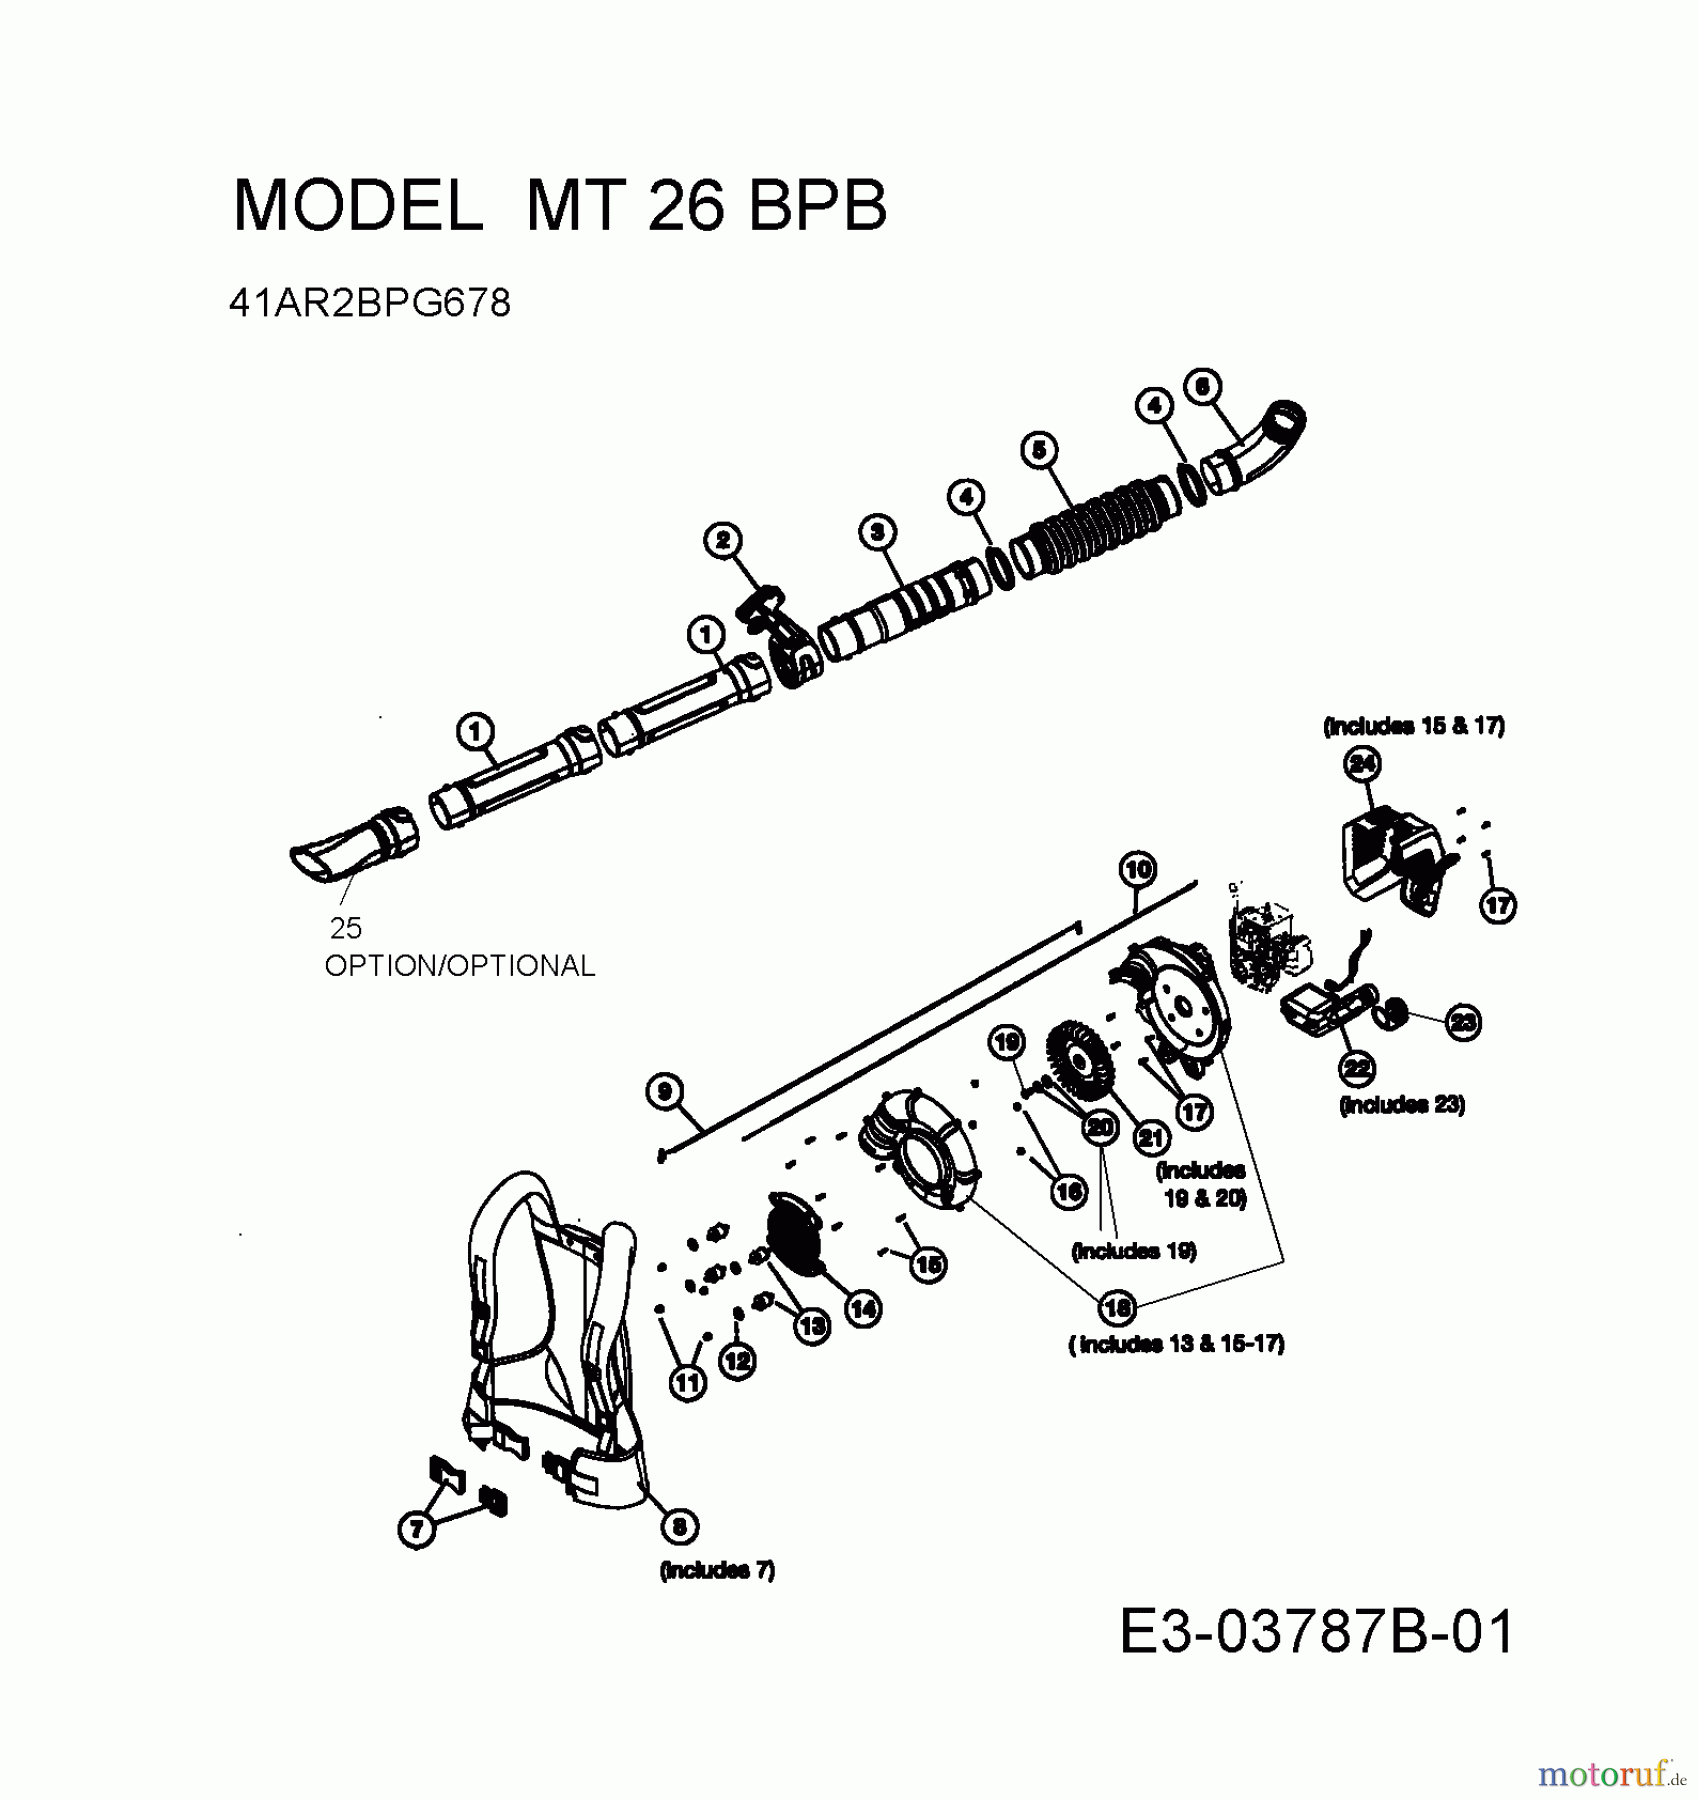  MTD Leaf blower, Blower vac MT 26 BPB 41AR2BPG678  (2010) Basic machine